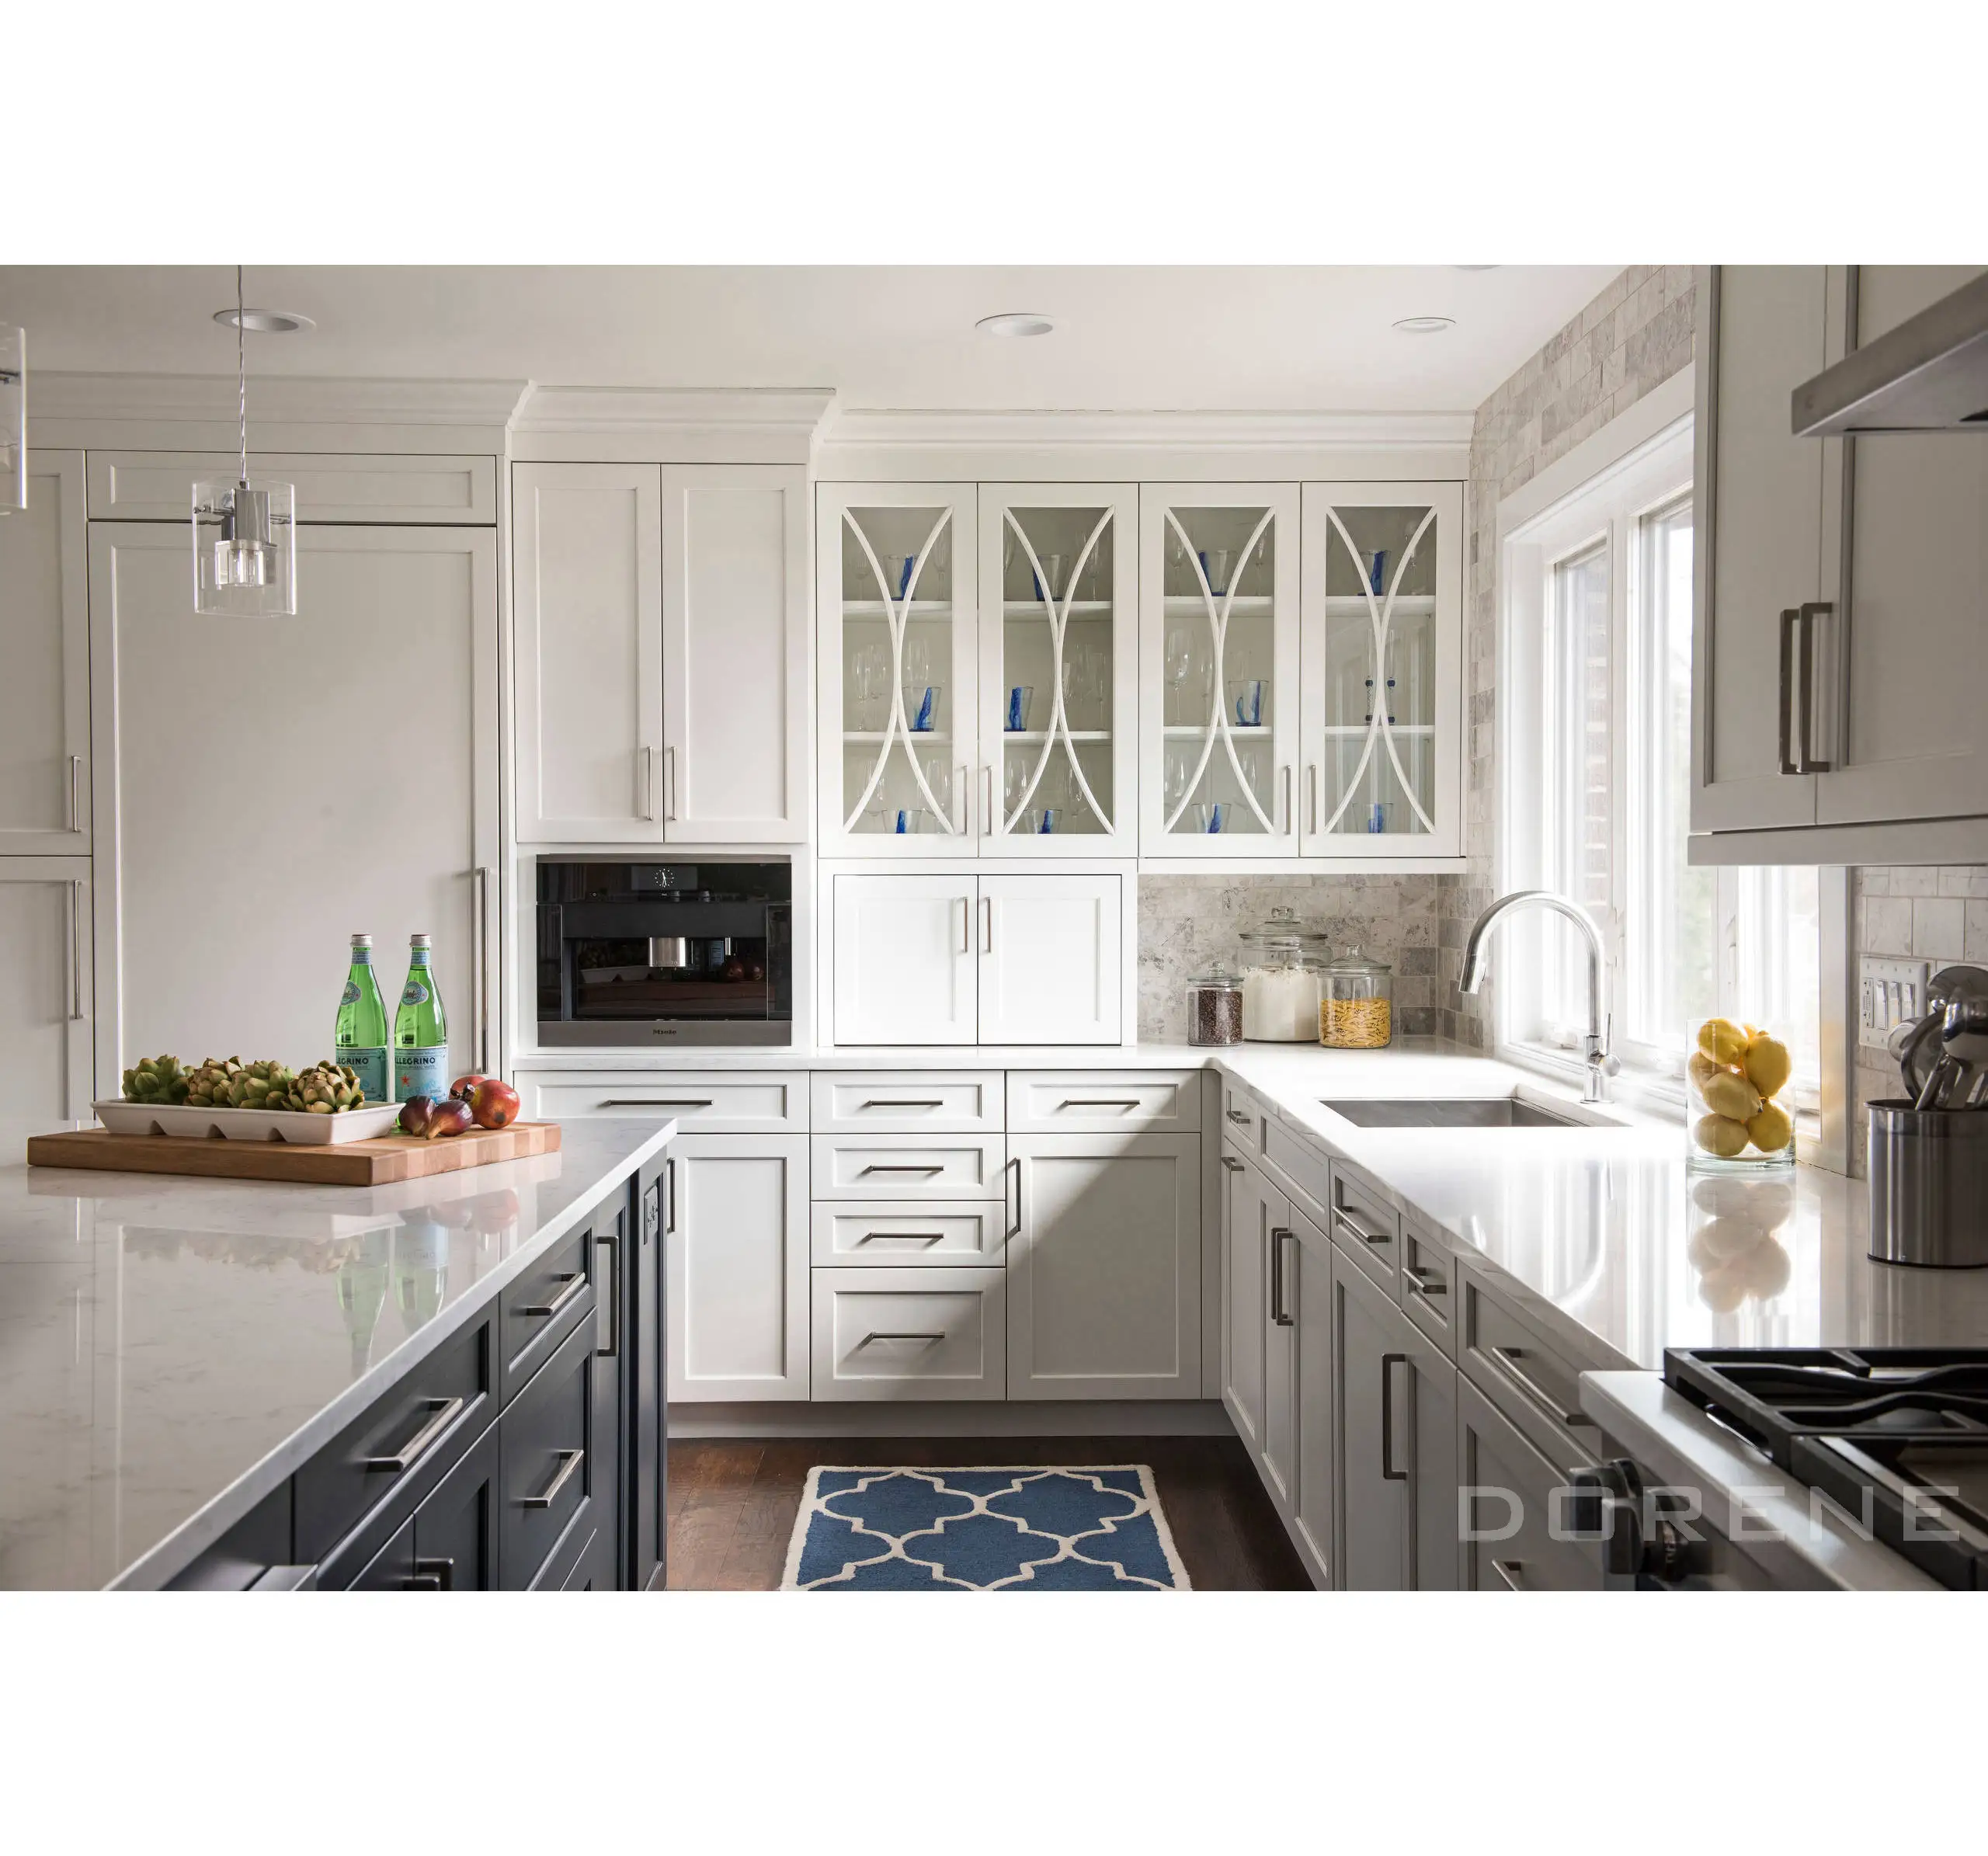 2023 Dorene Factory Price Complete Design Kitchen Cupboards Furniture Set Modern Custom Modular Cabinets Kitchen